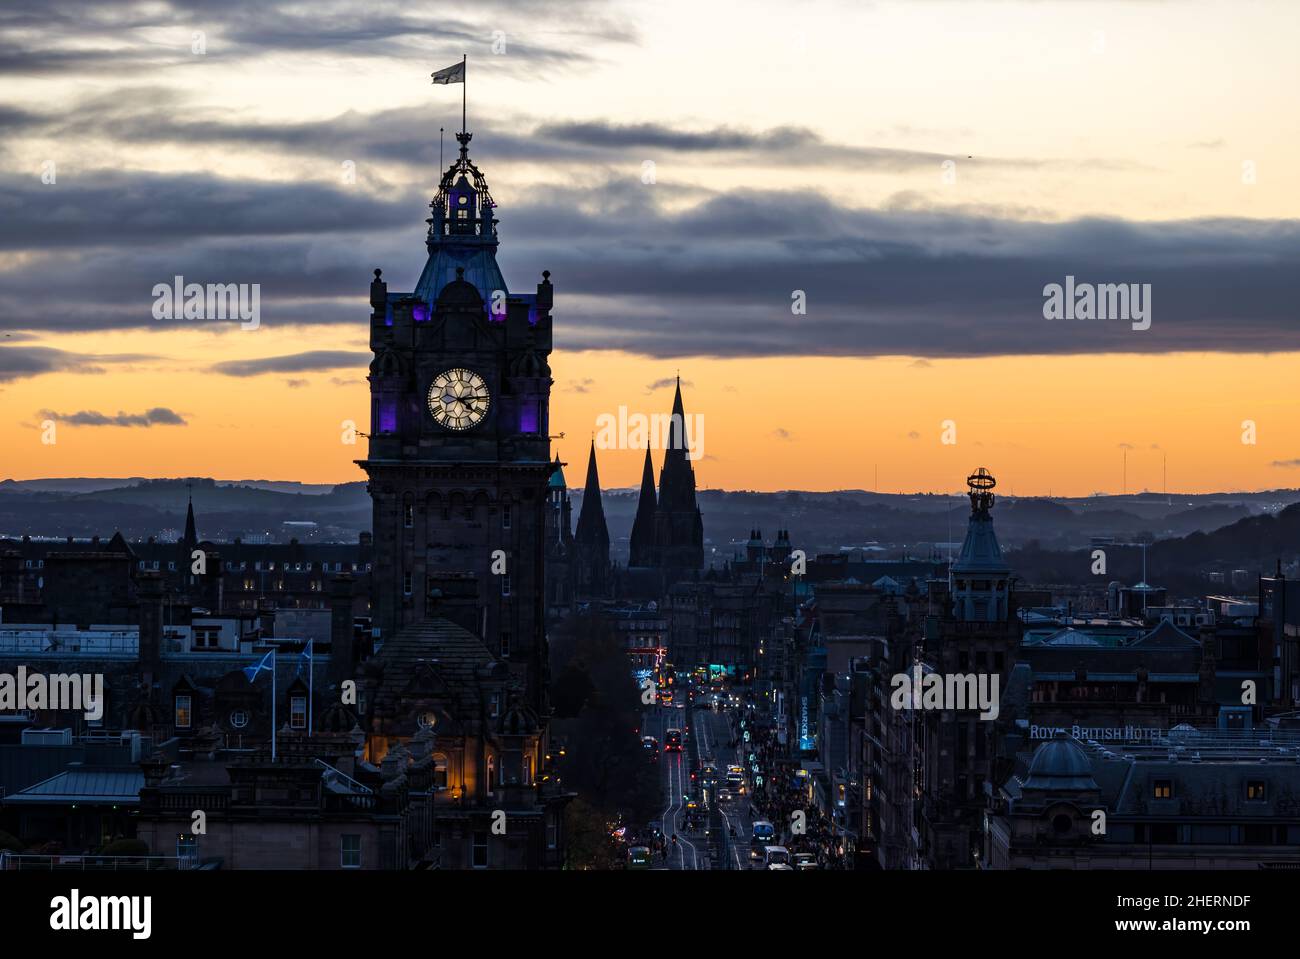 Balmoral clock tower & Princes Street lit up at night with a colourful sunset, Edinburgh, Scotland, UK Stock Photo